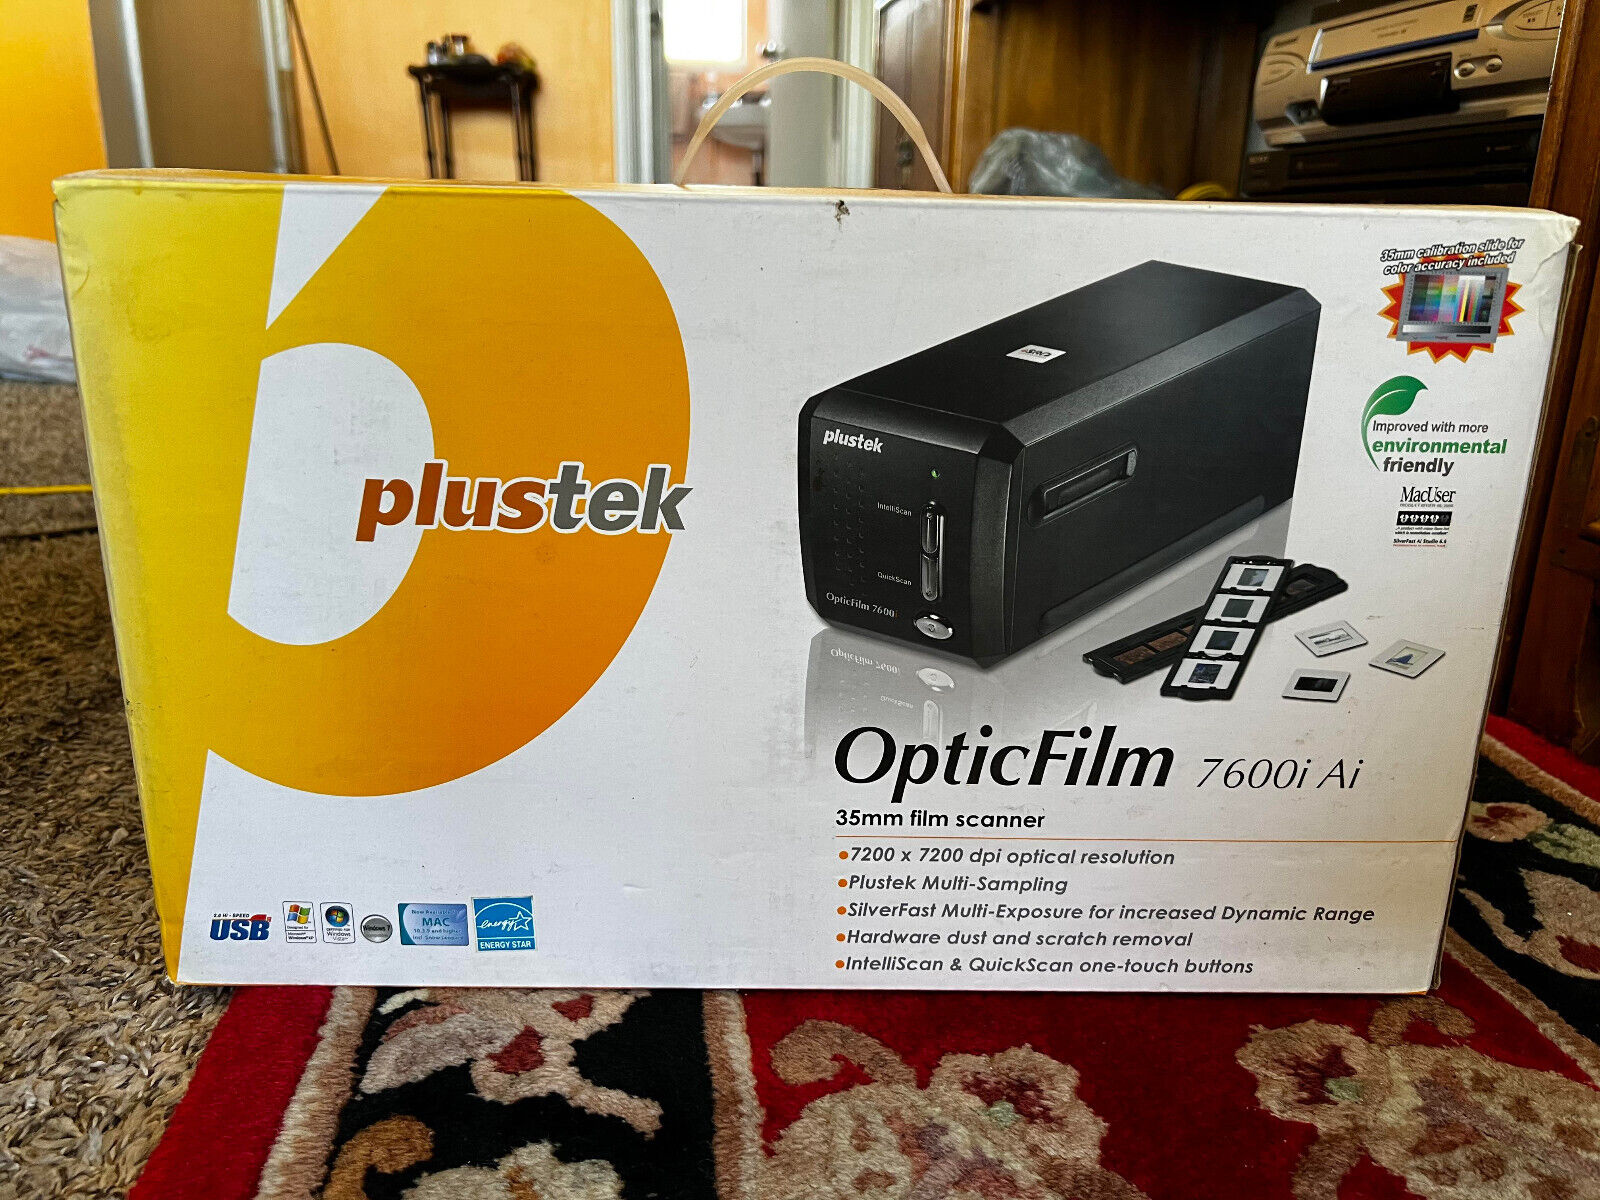 Plustek Opticfilm 7600i AI Scanner, new never used. Orig box, perfect cond